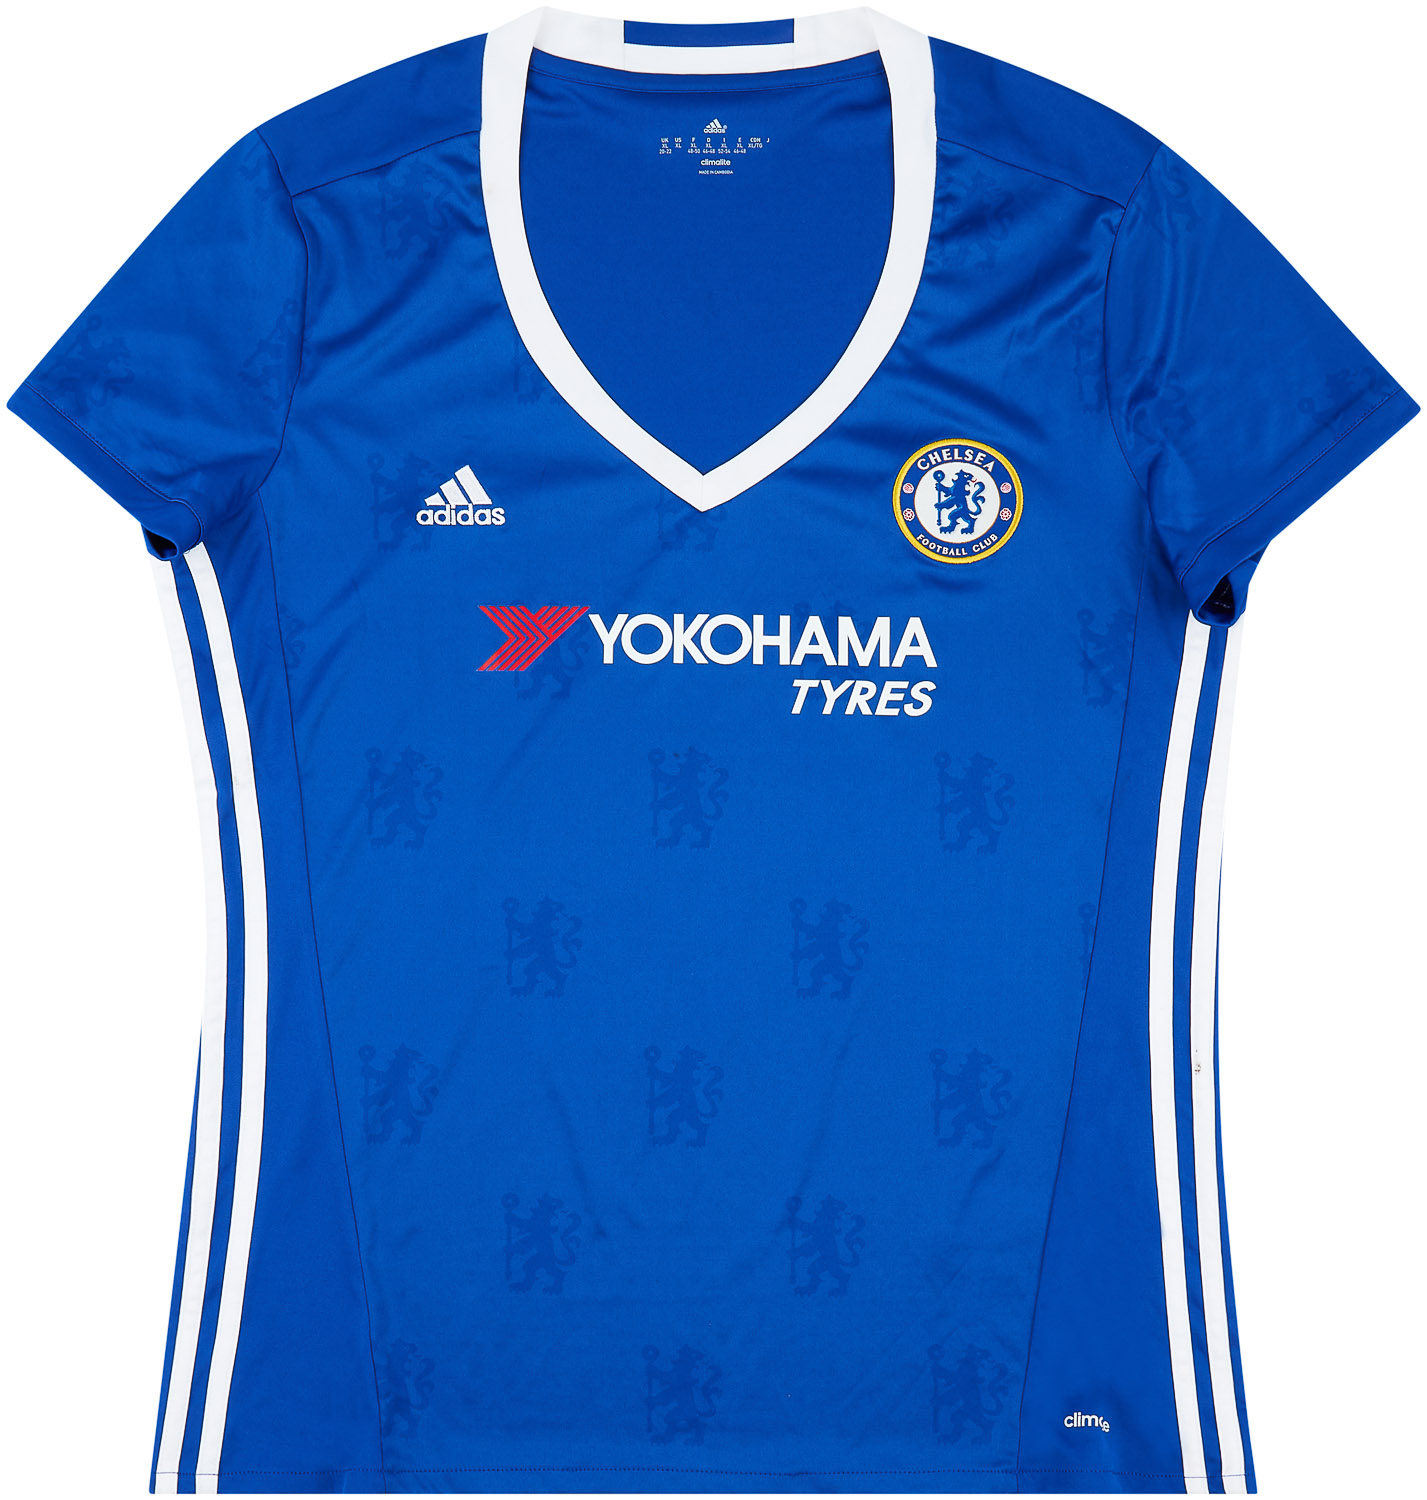 2016-17 Chelsea Home Shirt - 9/10 - Women's ()